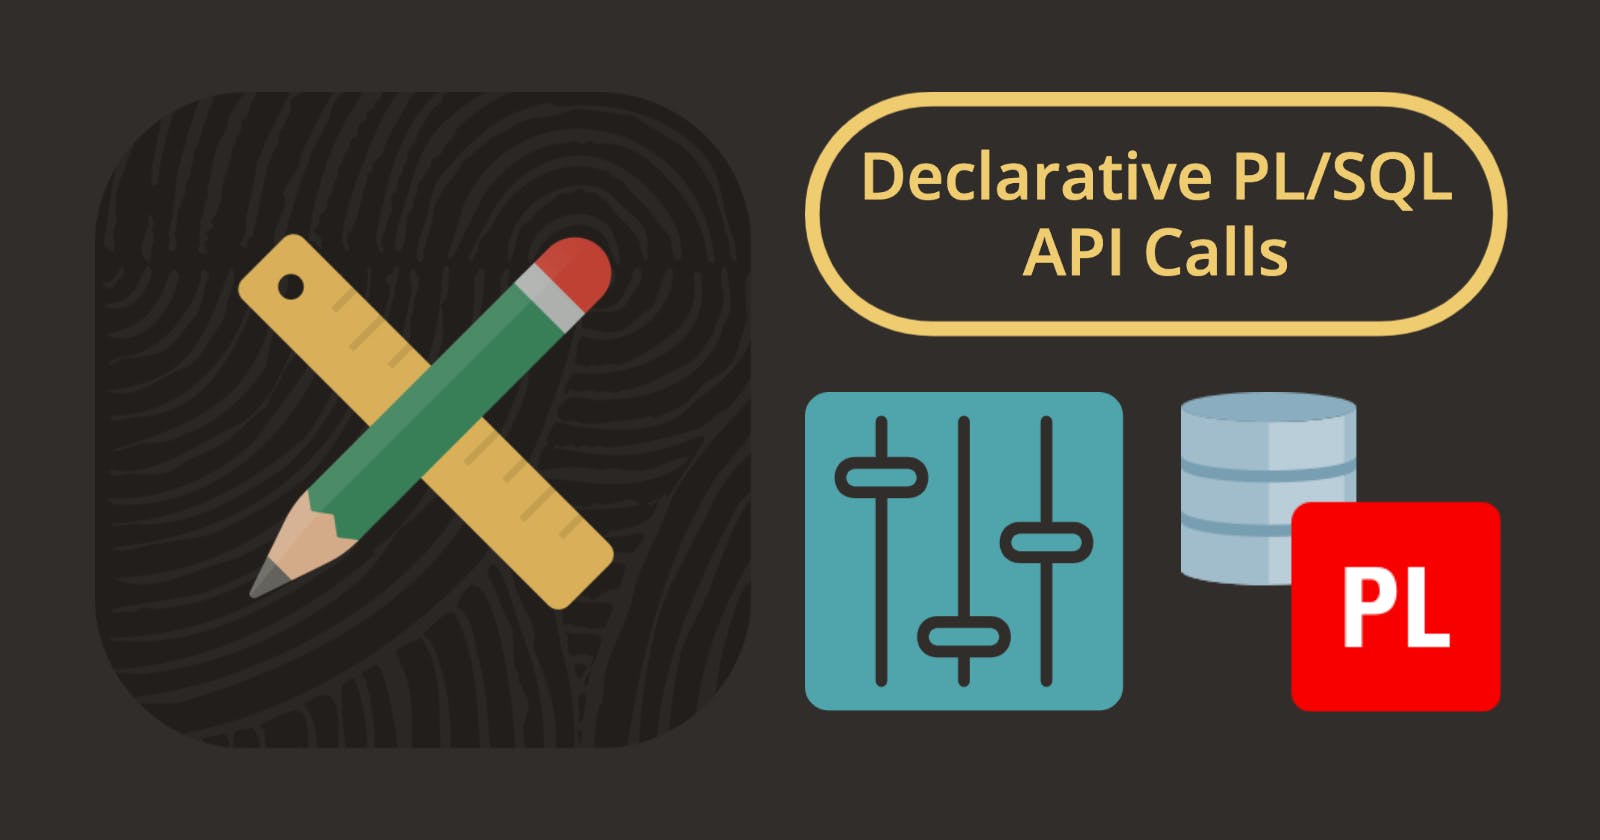 Call PL/SQL APIs Declaratively from APEX Using the Invoke API Process